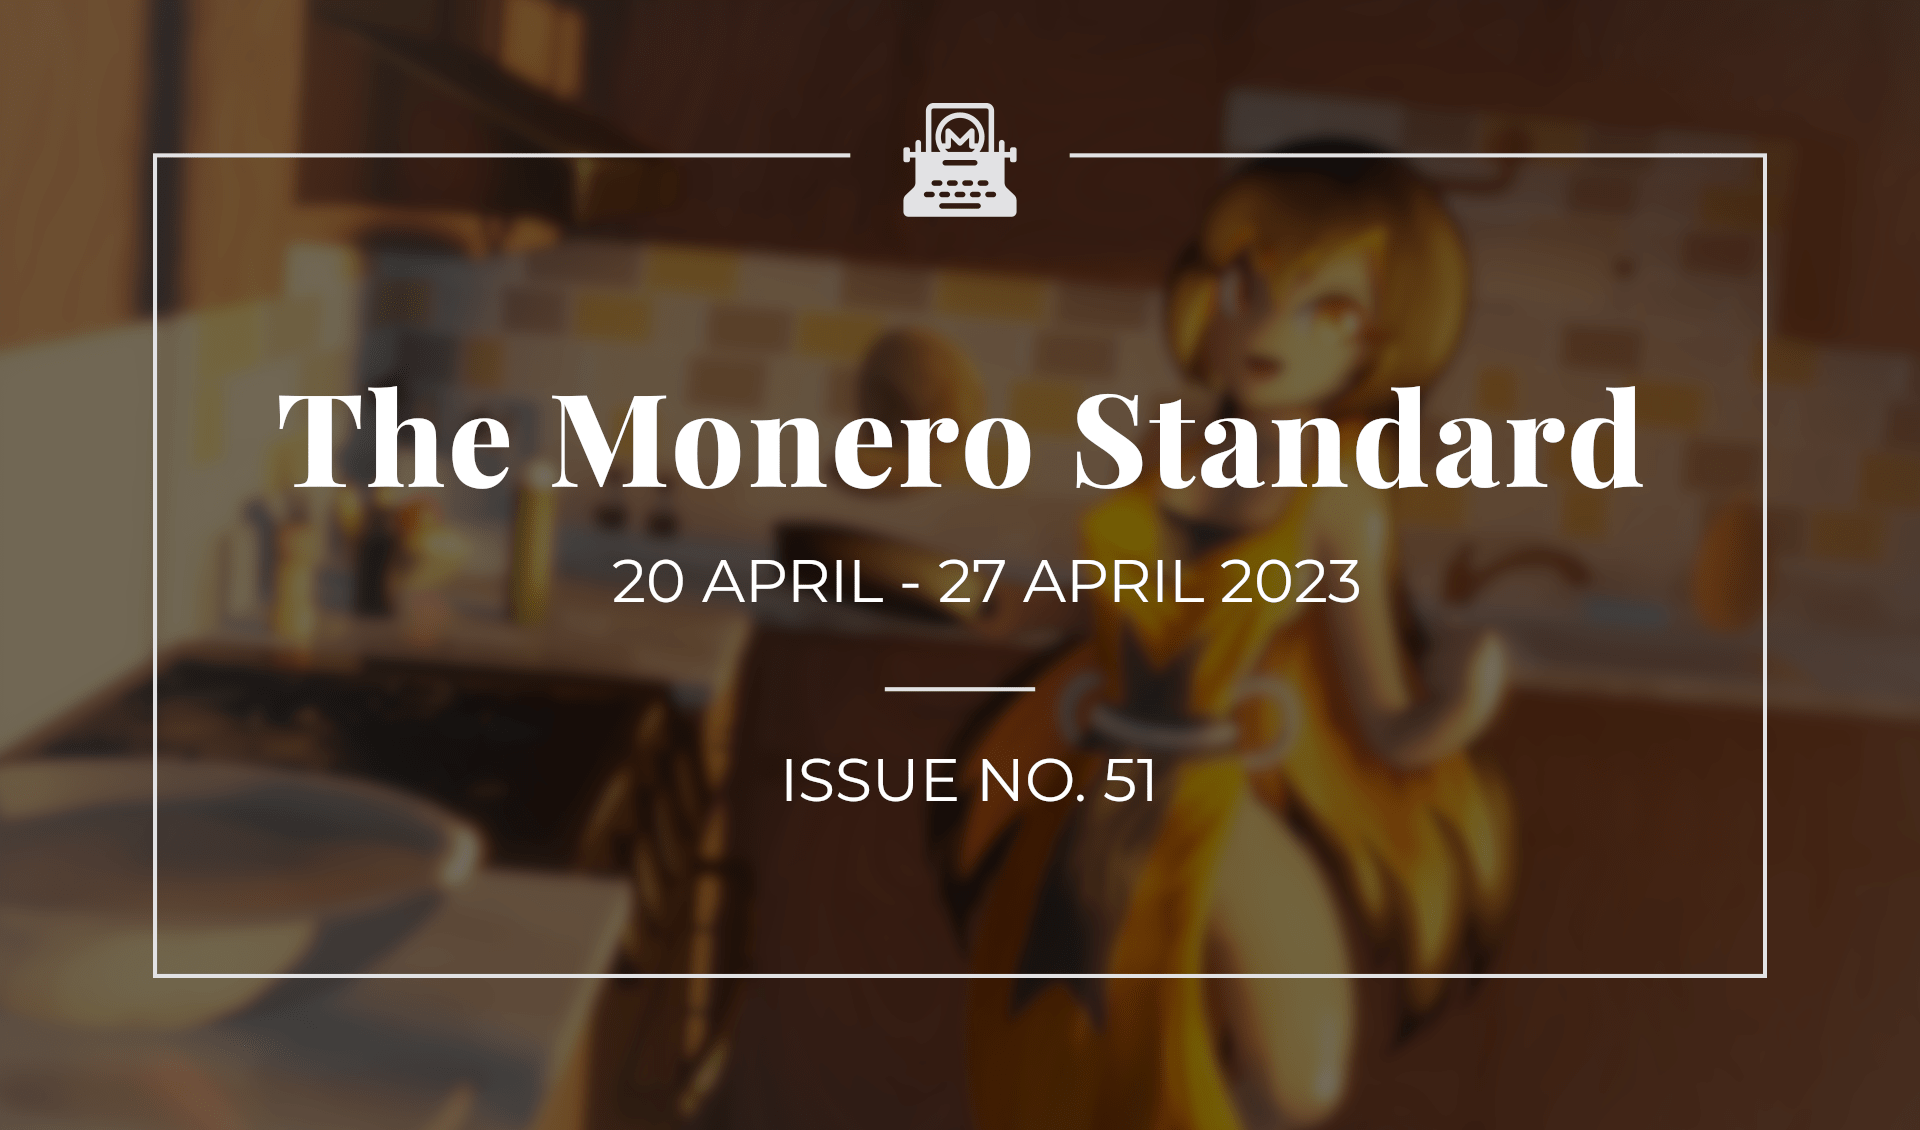 The Monero Standard #51: 20 April 2023 - 27 April 2023